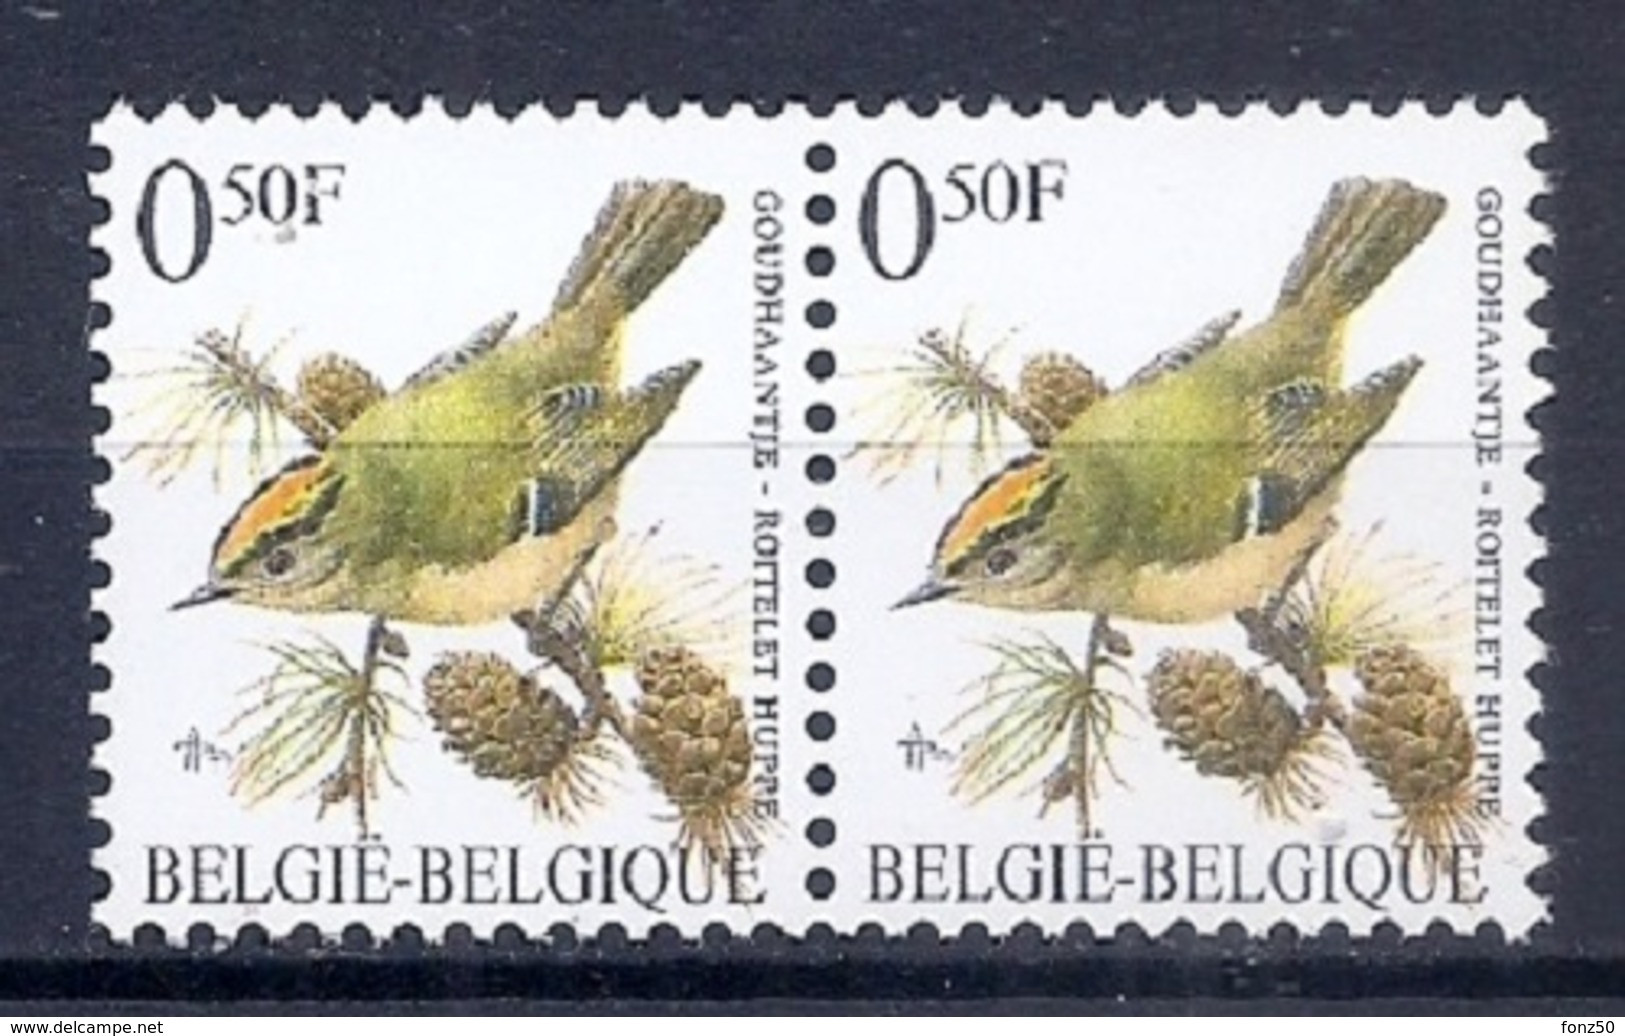 BELGIE * Buzin * Nr 2424 * Postfris Xx * FLUOR  PAPIER - 1985-.. Birds (Buzin)